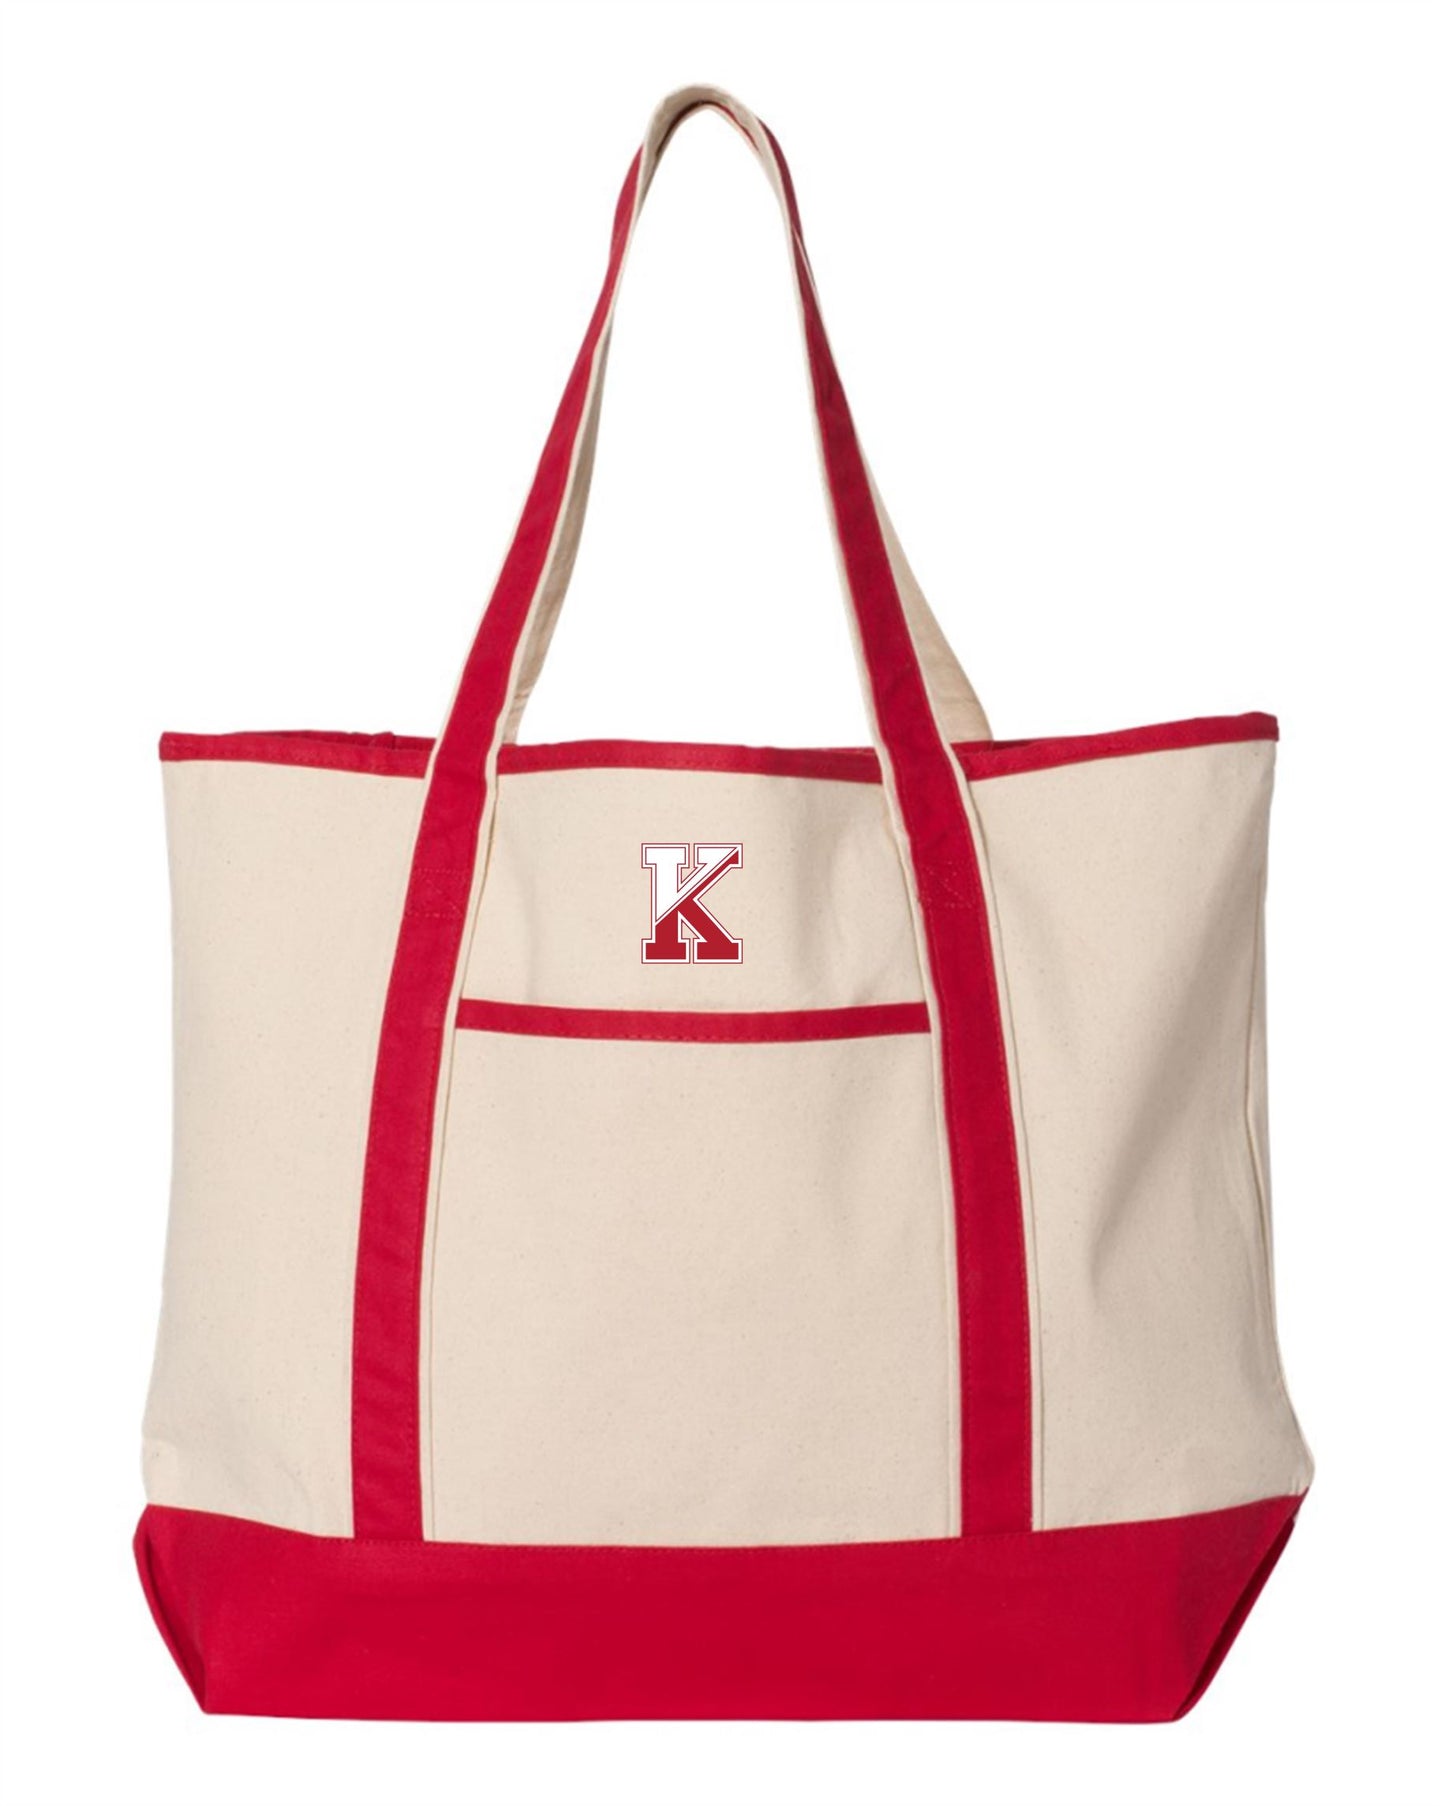 Kingston Tote Bag